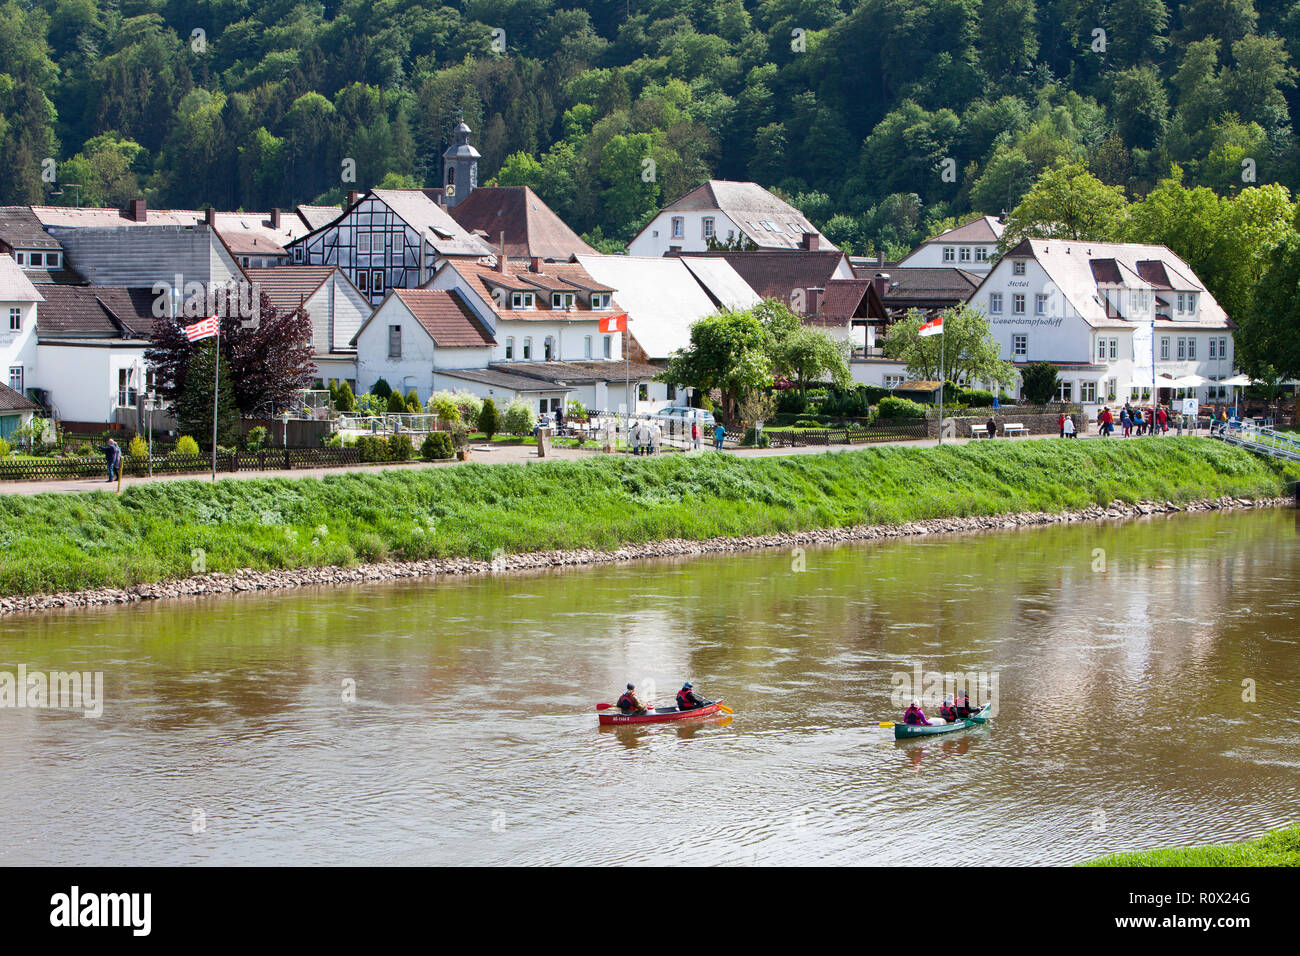 Les pagayeurs en canot sur la rivière Weser, Bad Karlshafen, Haute Vallée de la Weser, Weser Uplands, Thuringe, Hesse, Germany, Europe Banque D'Images